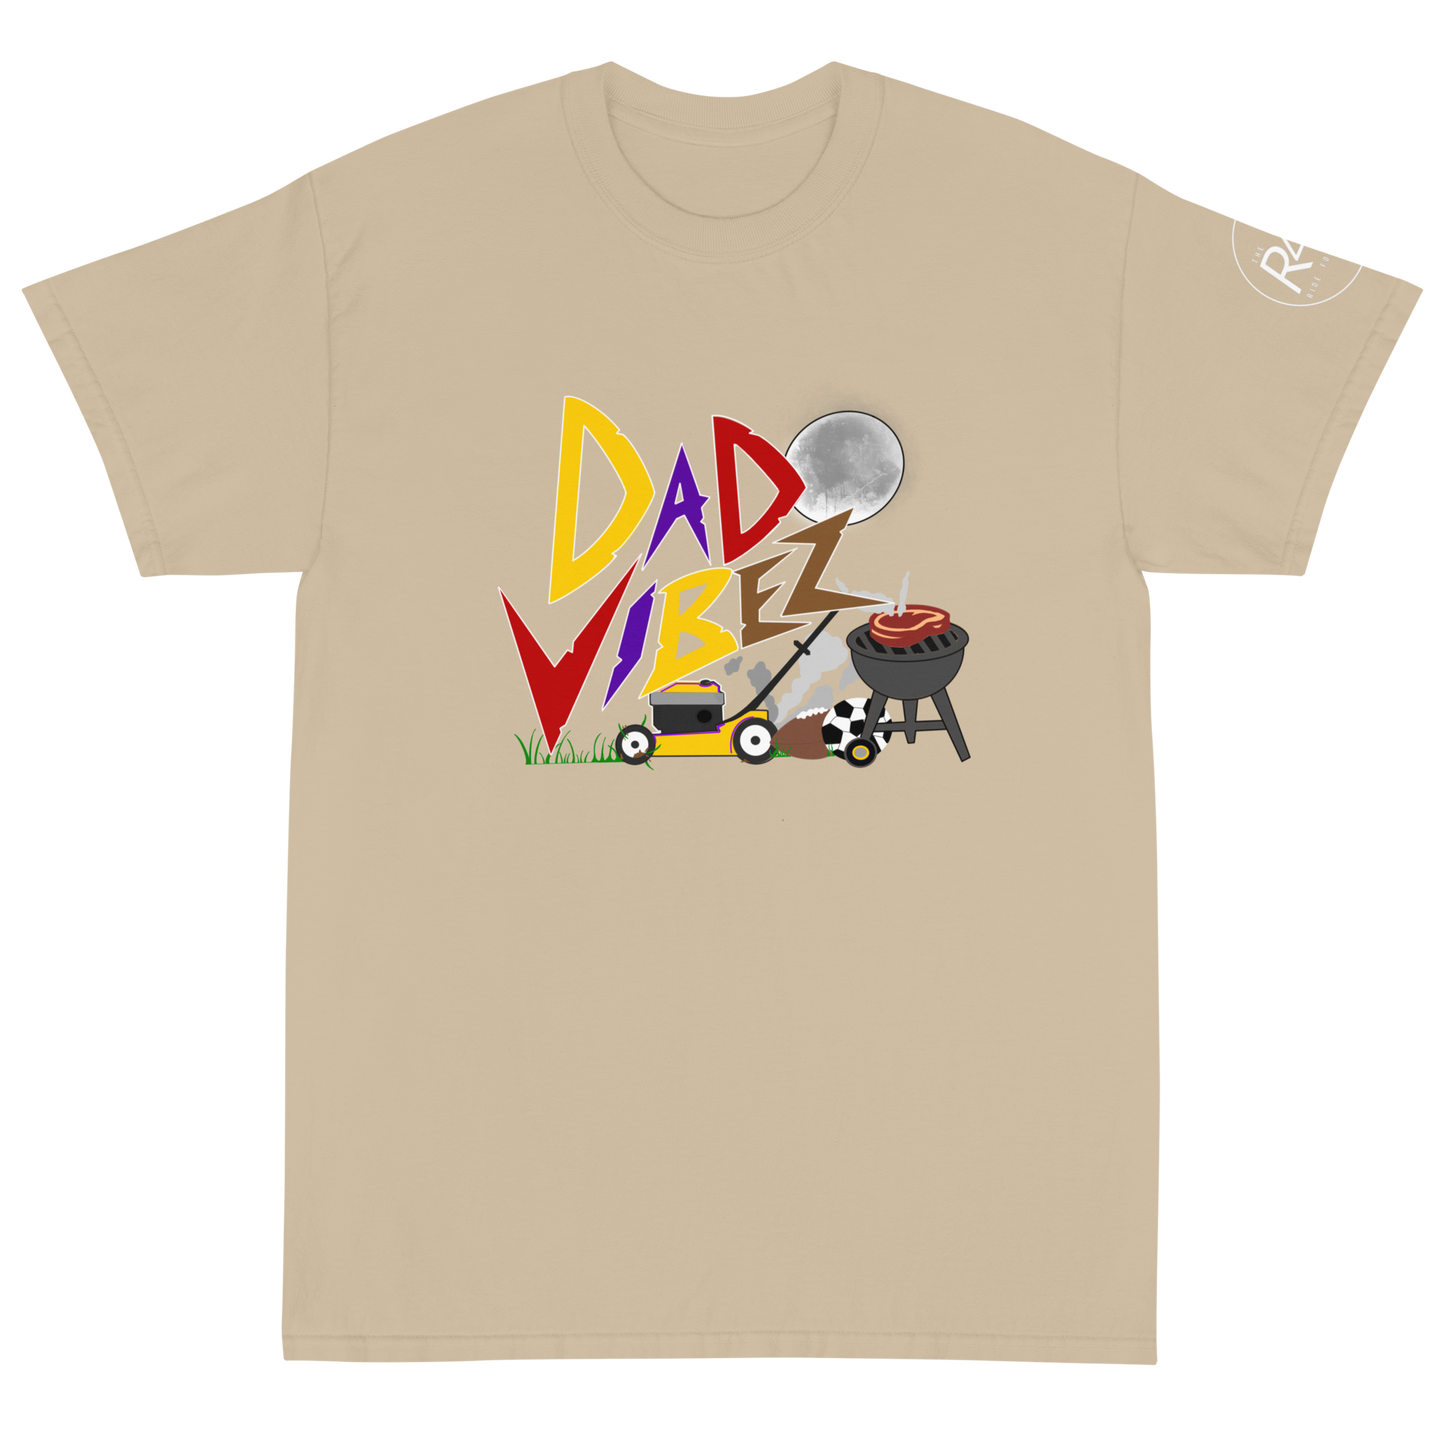 DAD VIBEZ - Short Sleeve T-Shirt